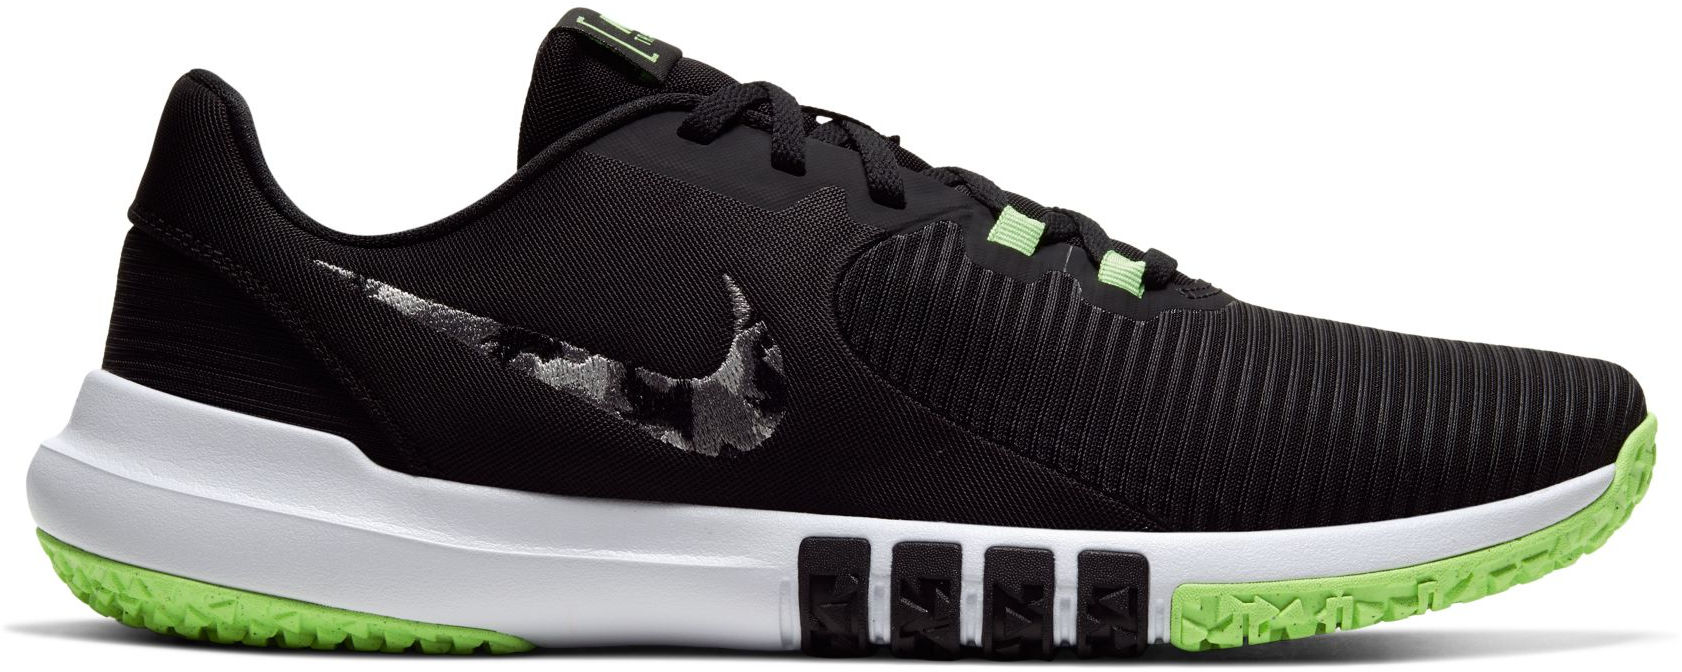 Chaussures de fitness Nike FLEX CONTROL TR4